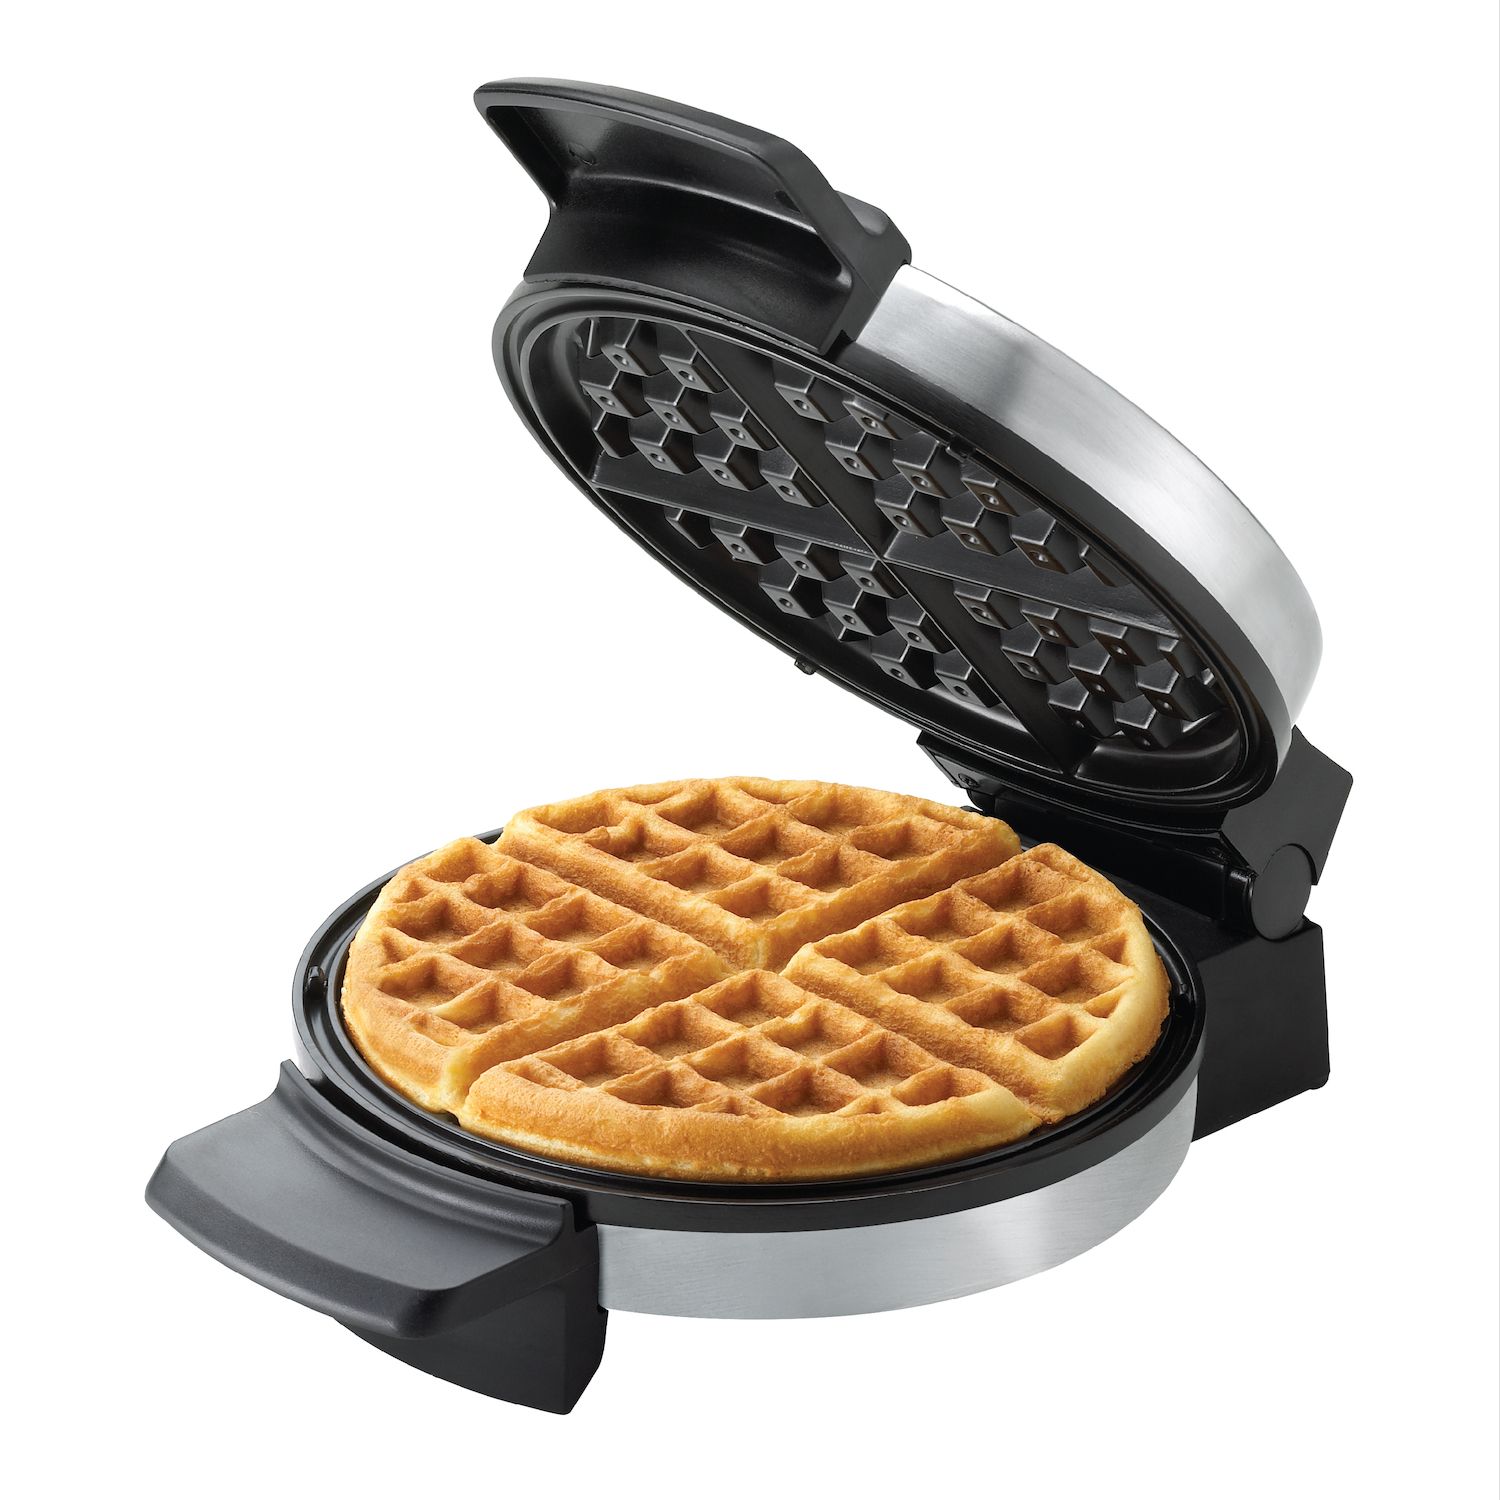 Kohl's  Mini Dreidel Waffle Maker (+ More Options) Just $6.39 Each (Reg.  $19.99) WYB 2 ~ Today Only